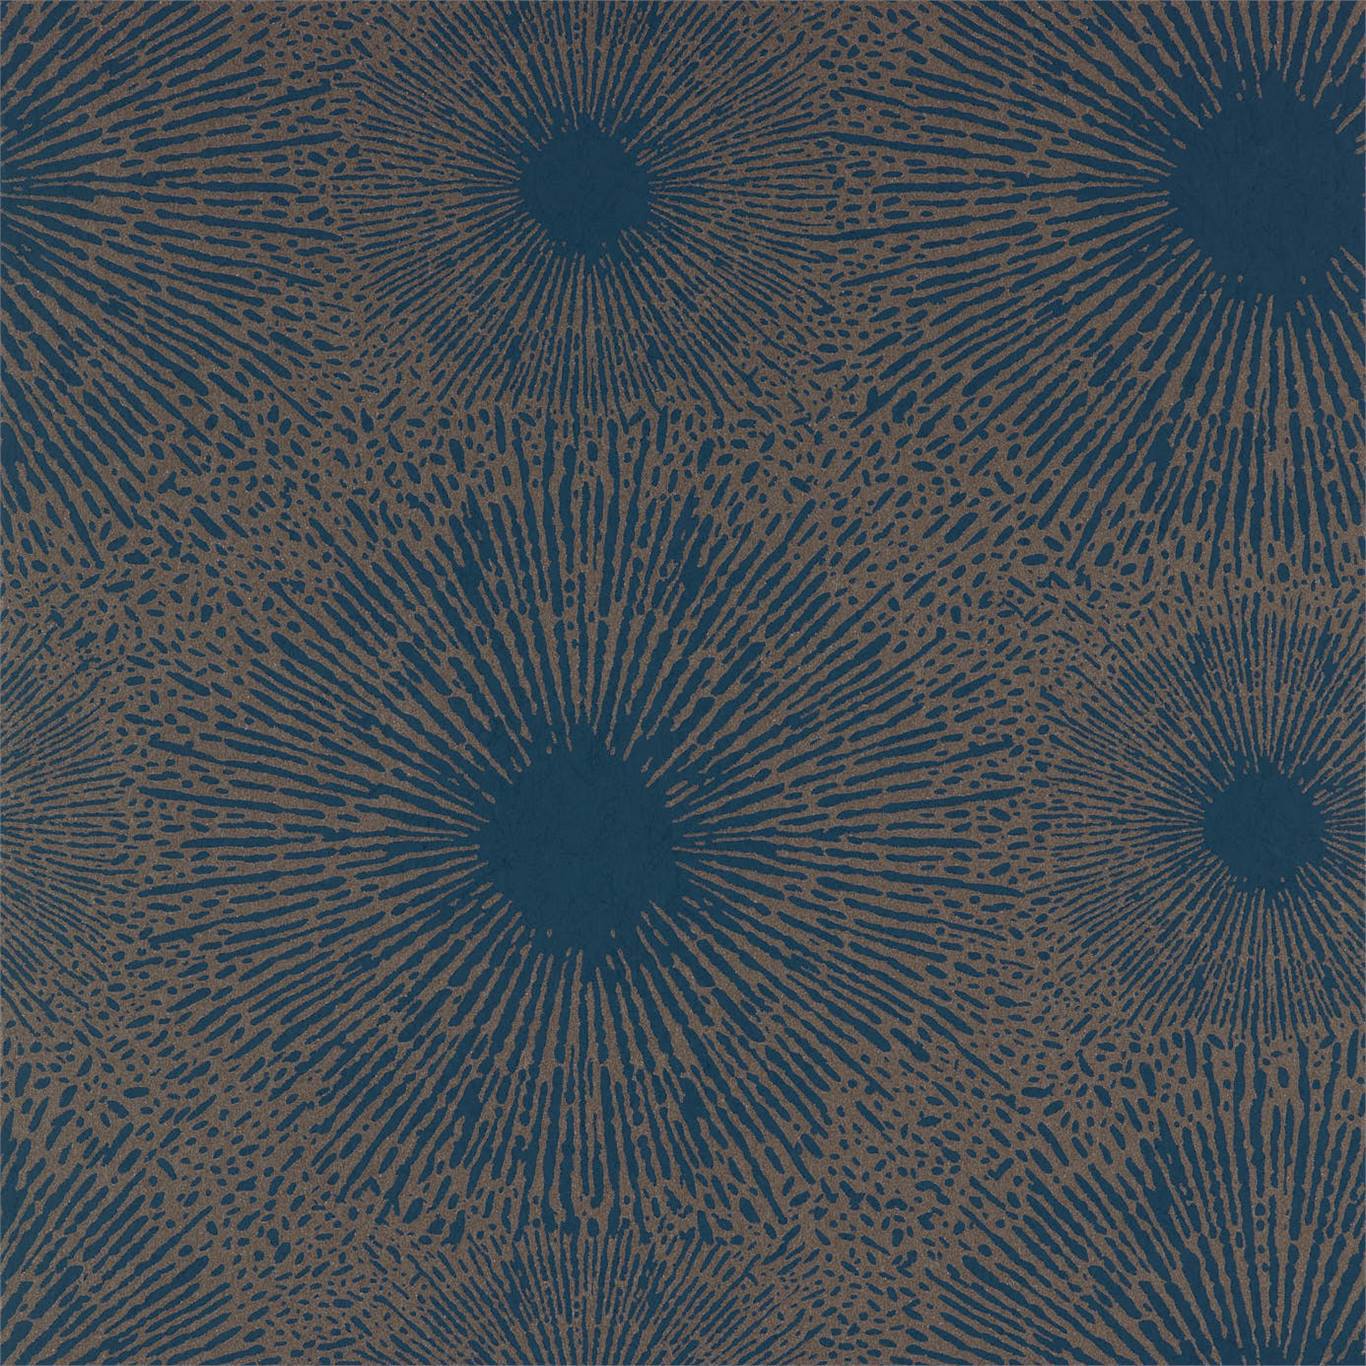 Perlite Lapis / Copper Ore Wallpaper EVIW112068 by Harlequin